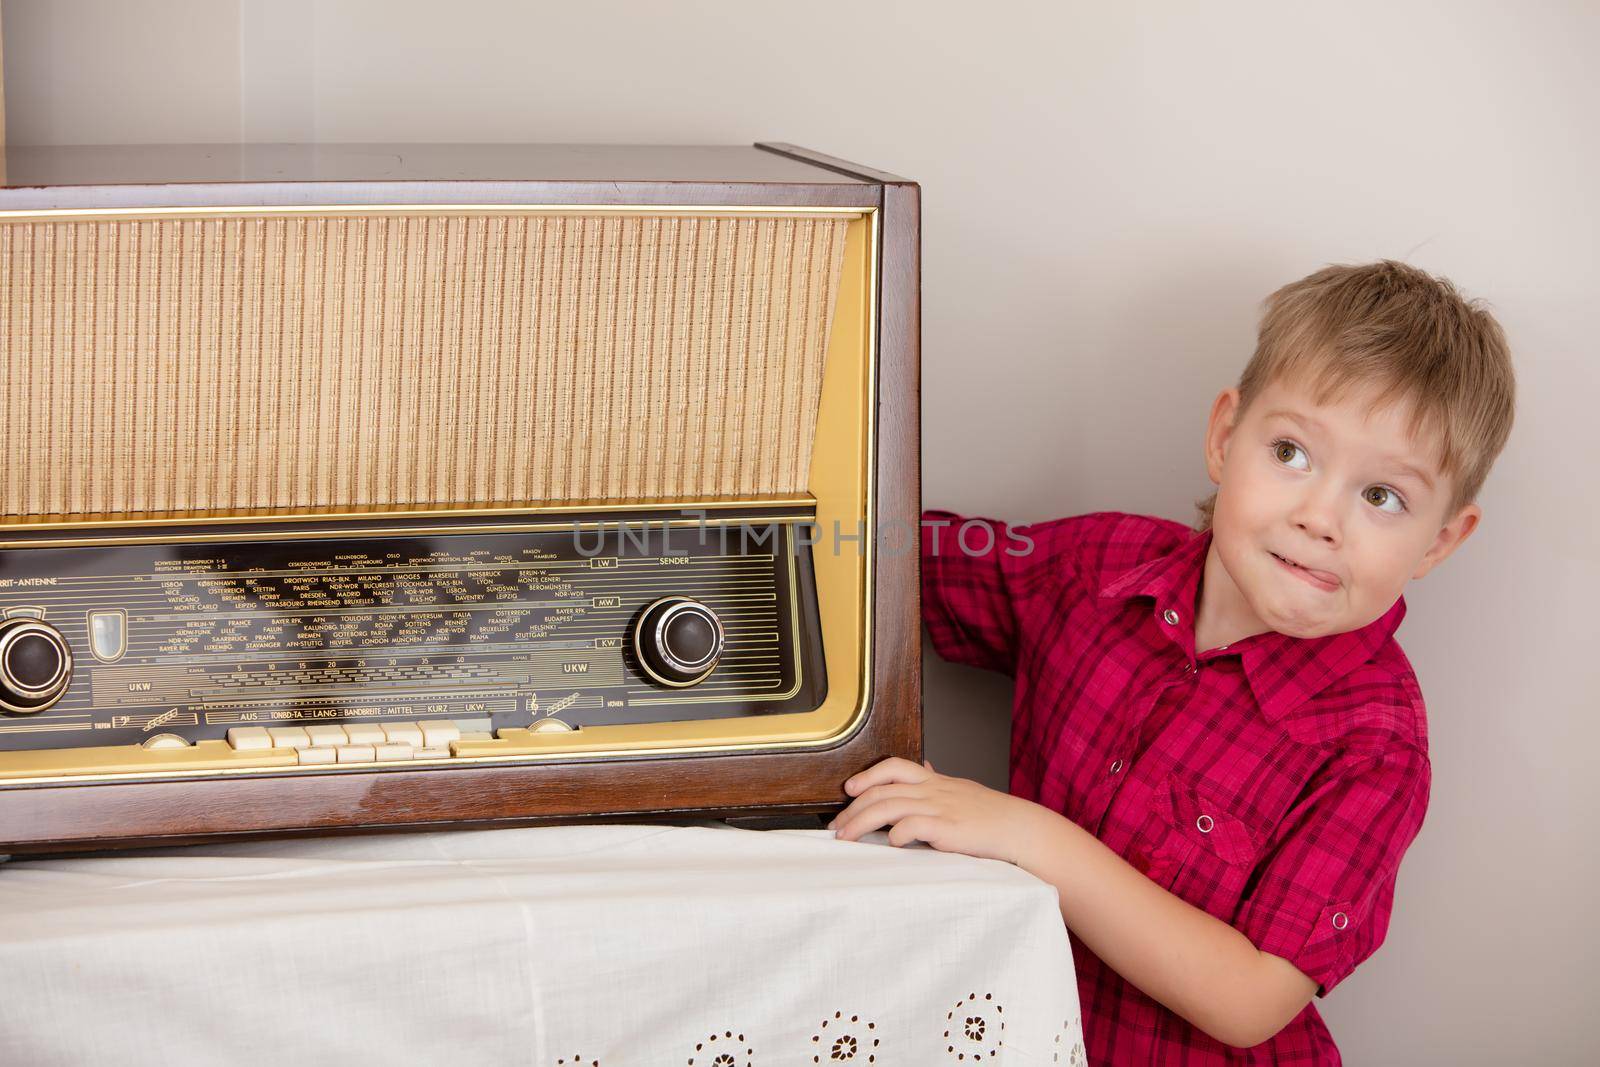 The boy near the old radio by kolesnikov_studio